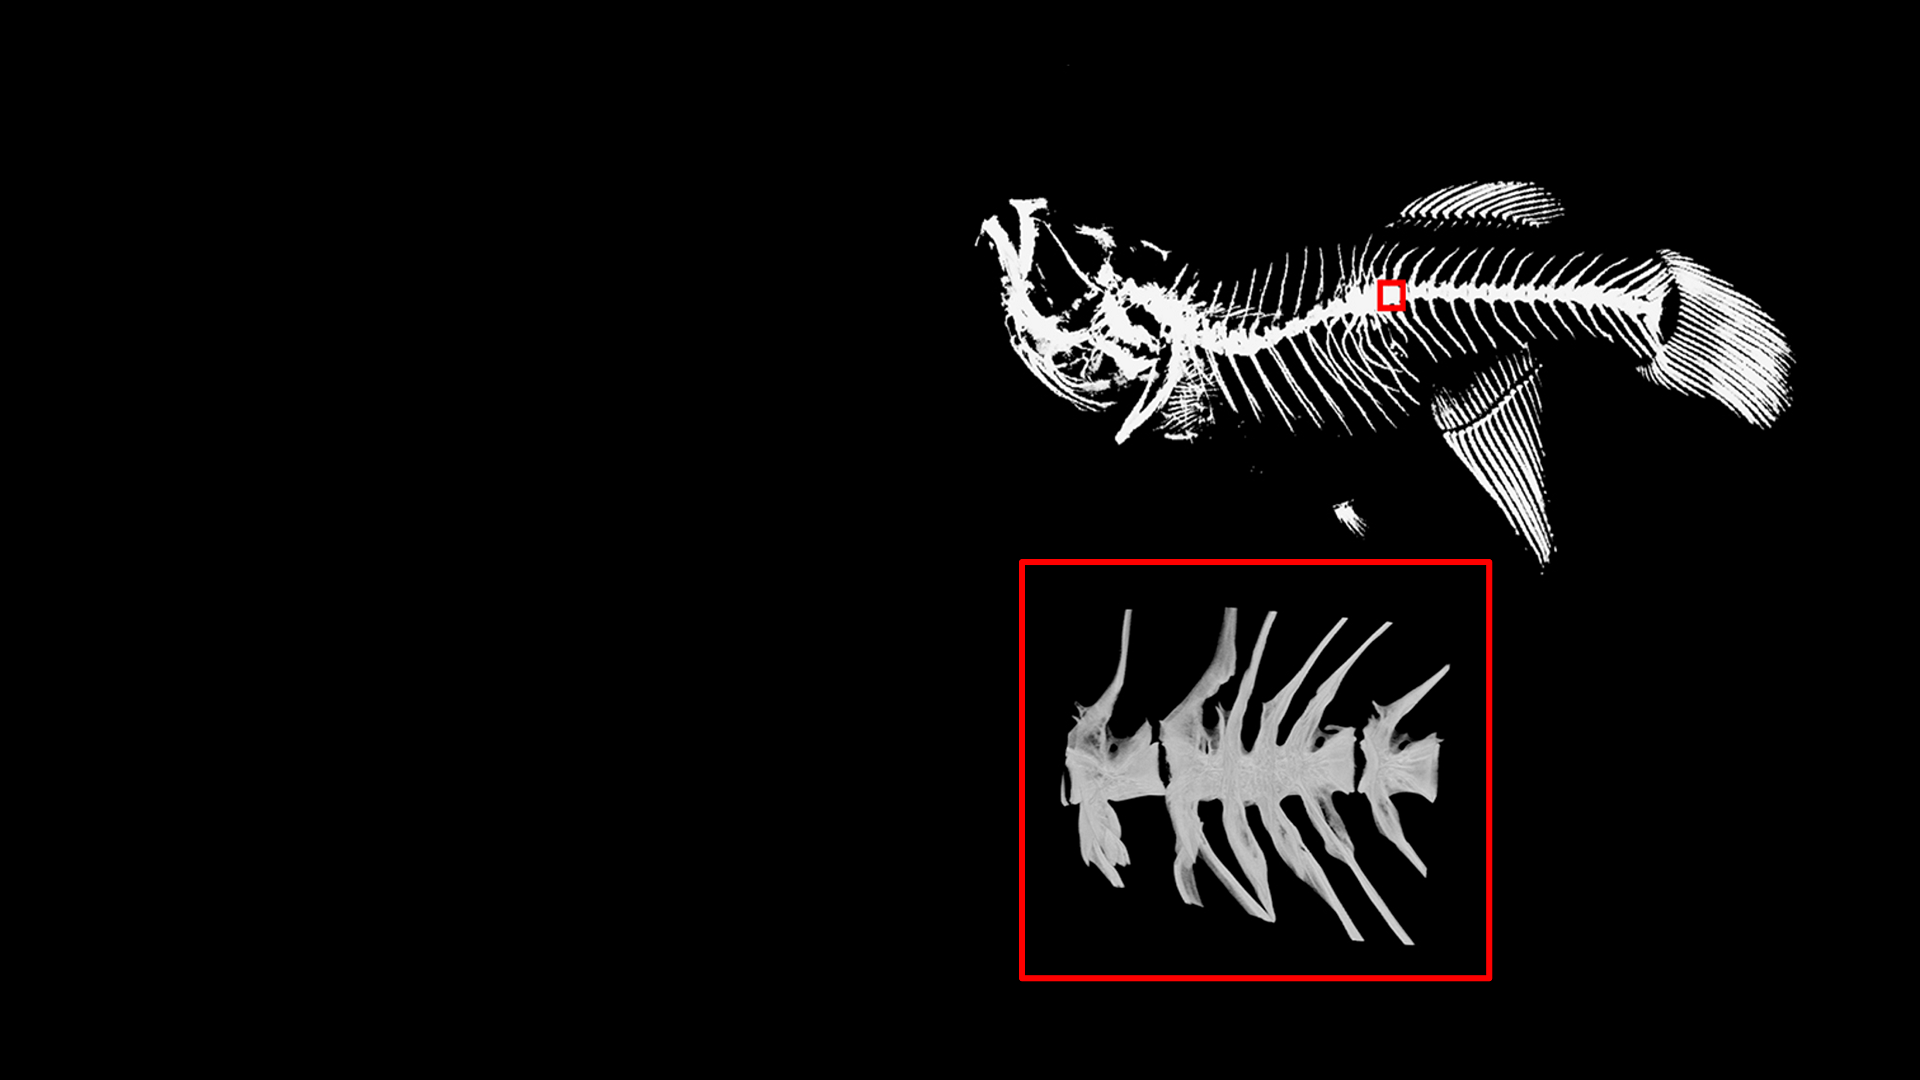 Morphology of aged turquoise killifish bone imaged with ZEISS Xradia Versa X-ray microscope